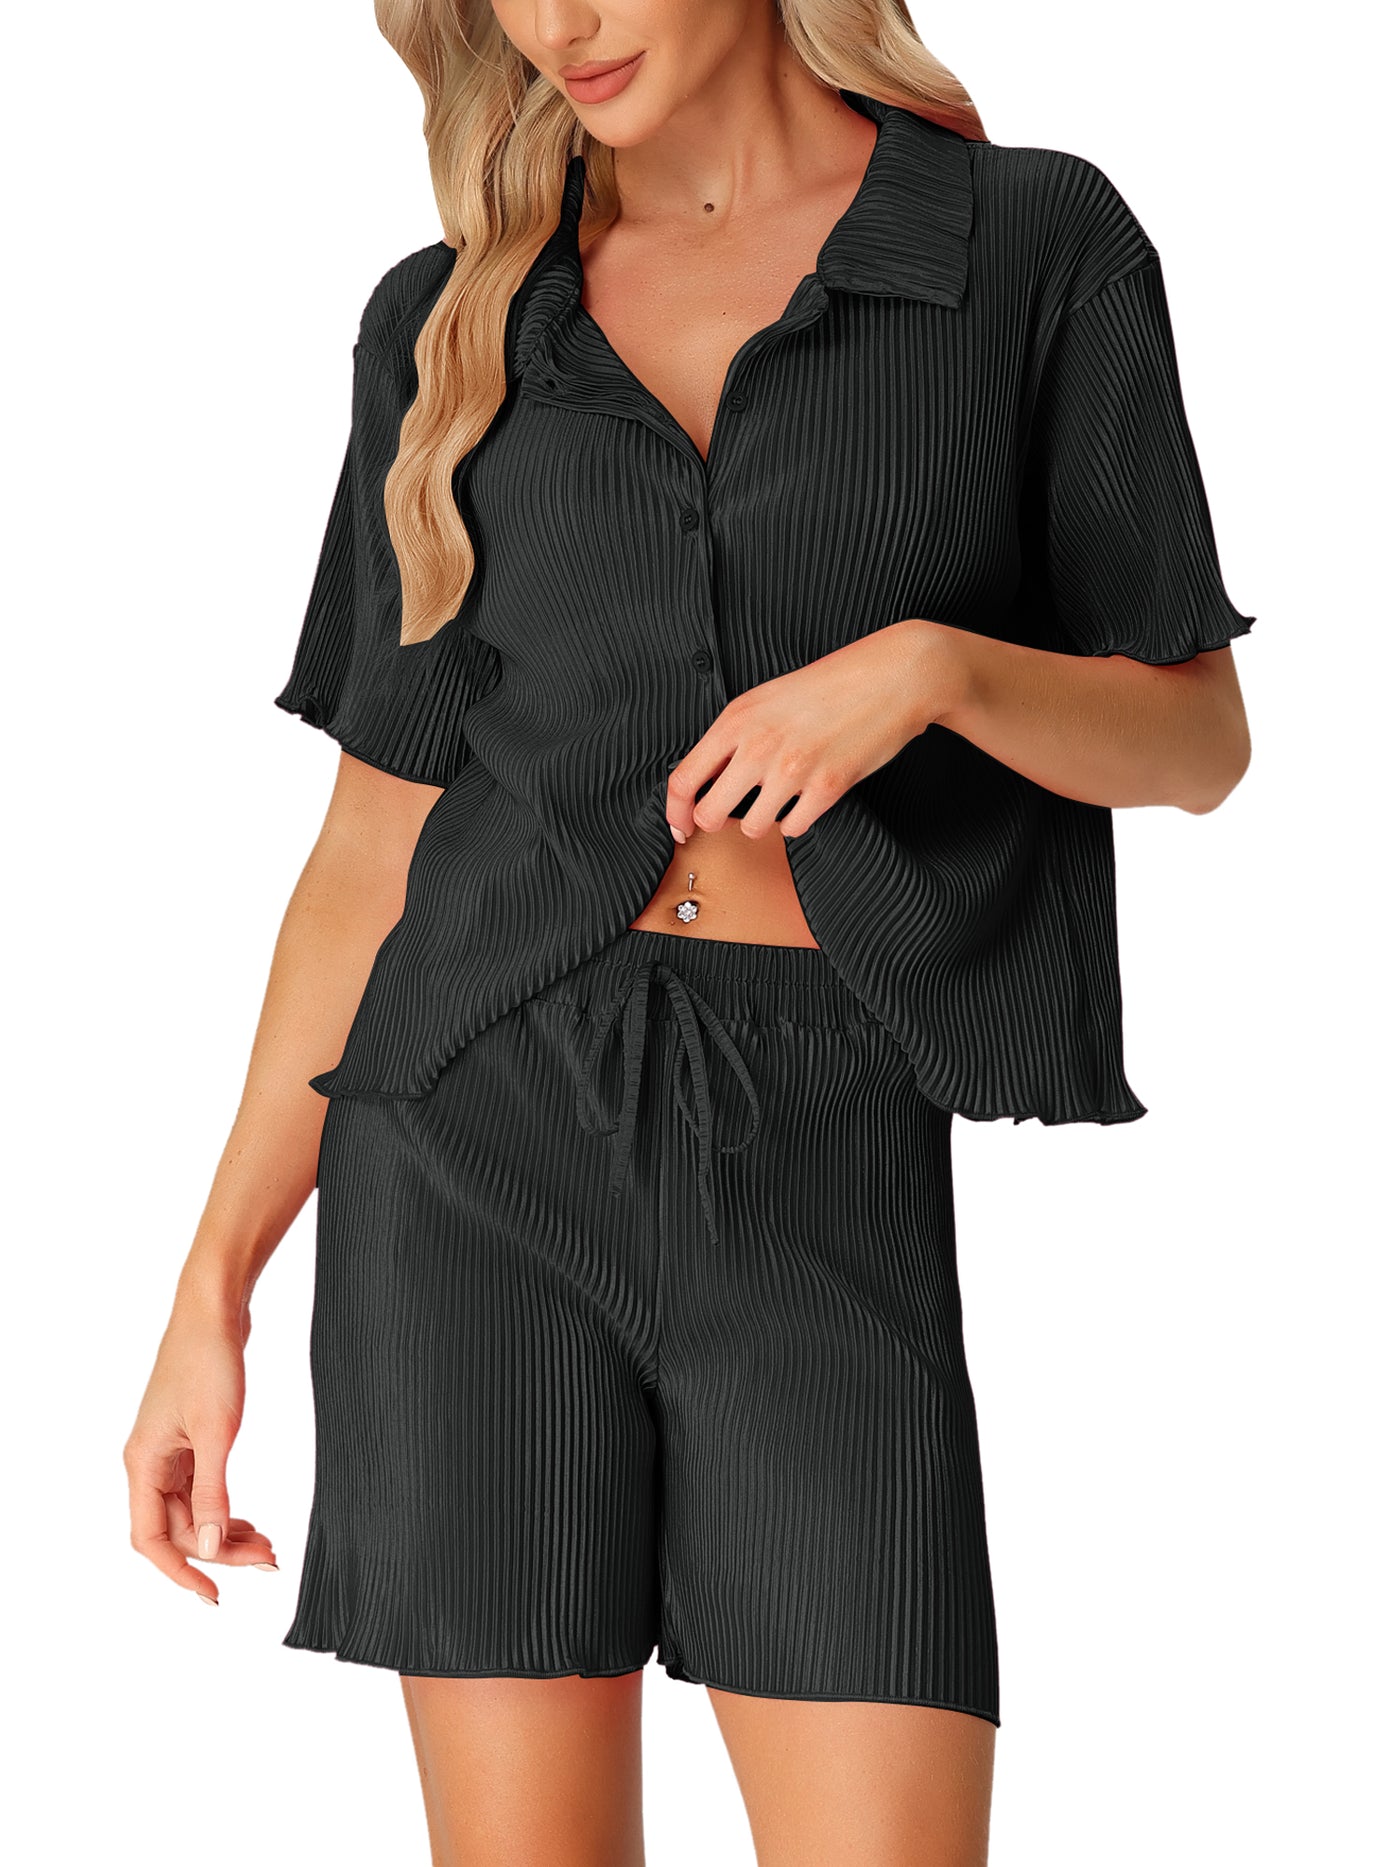 Bublédon Women Short Sleeve Button Down Shirt and Shorts Casual Outfits Loungewear